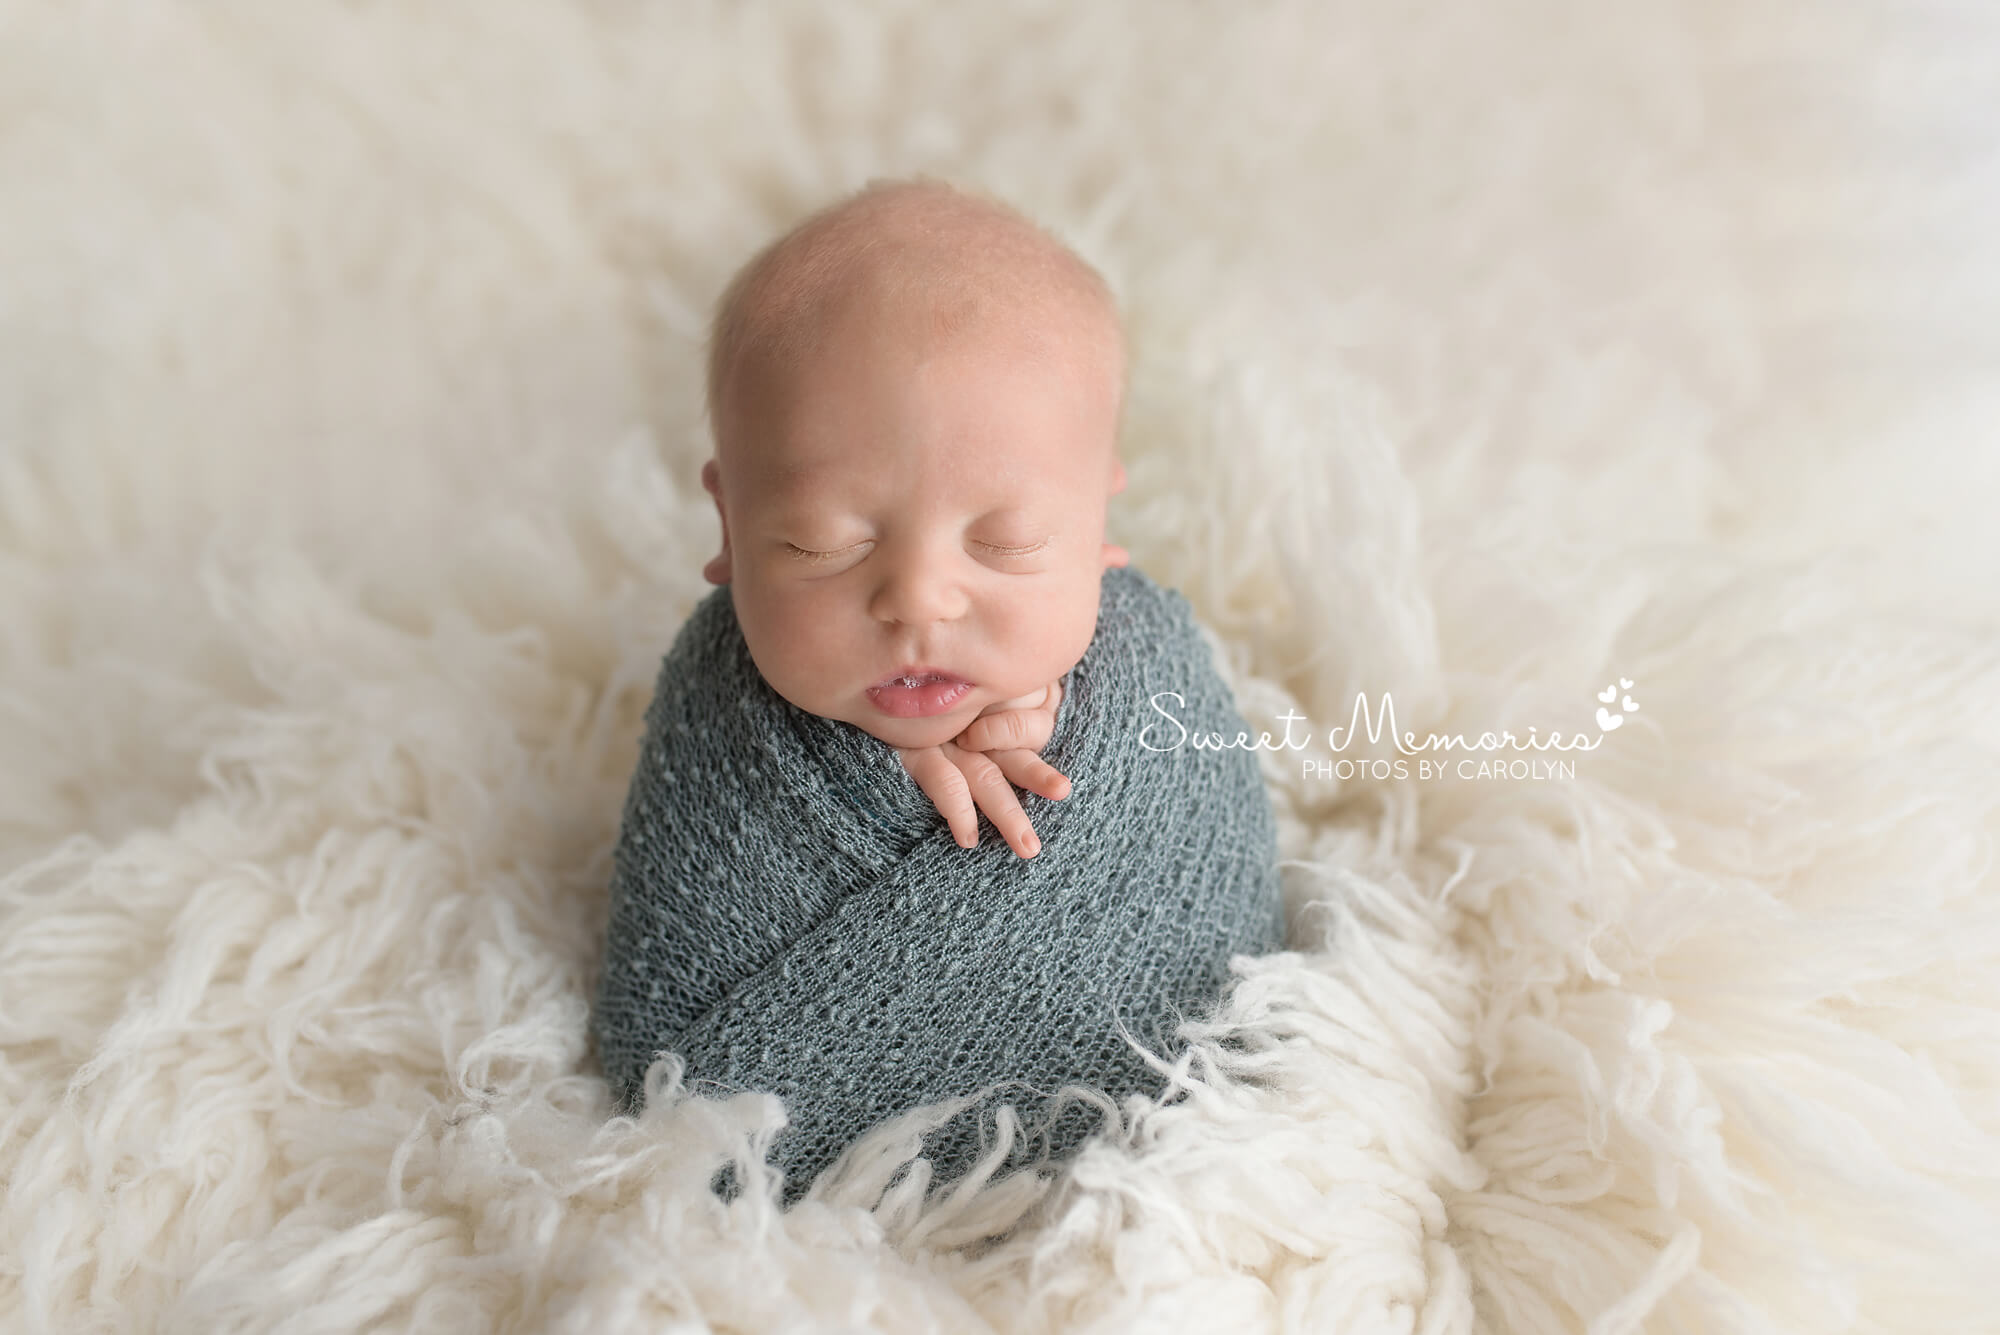 newborn baby boy swaddled in gray potato sack pose | Warrington, PA newborn photographer | Sweet Memories Photos by Carolyn, Quakertown Pennsylvania